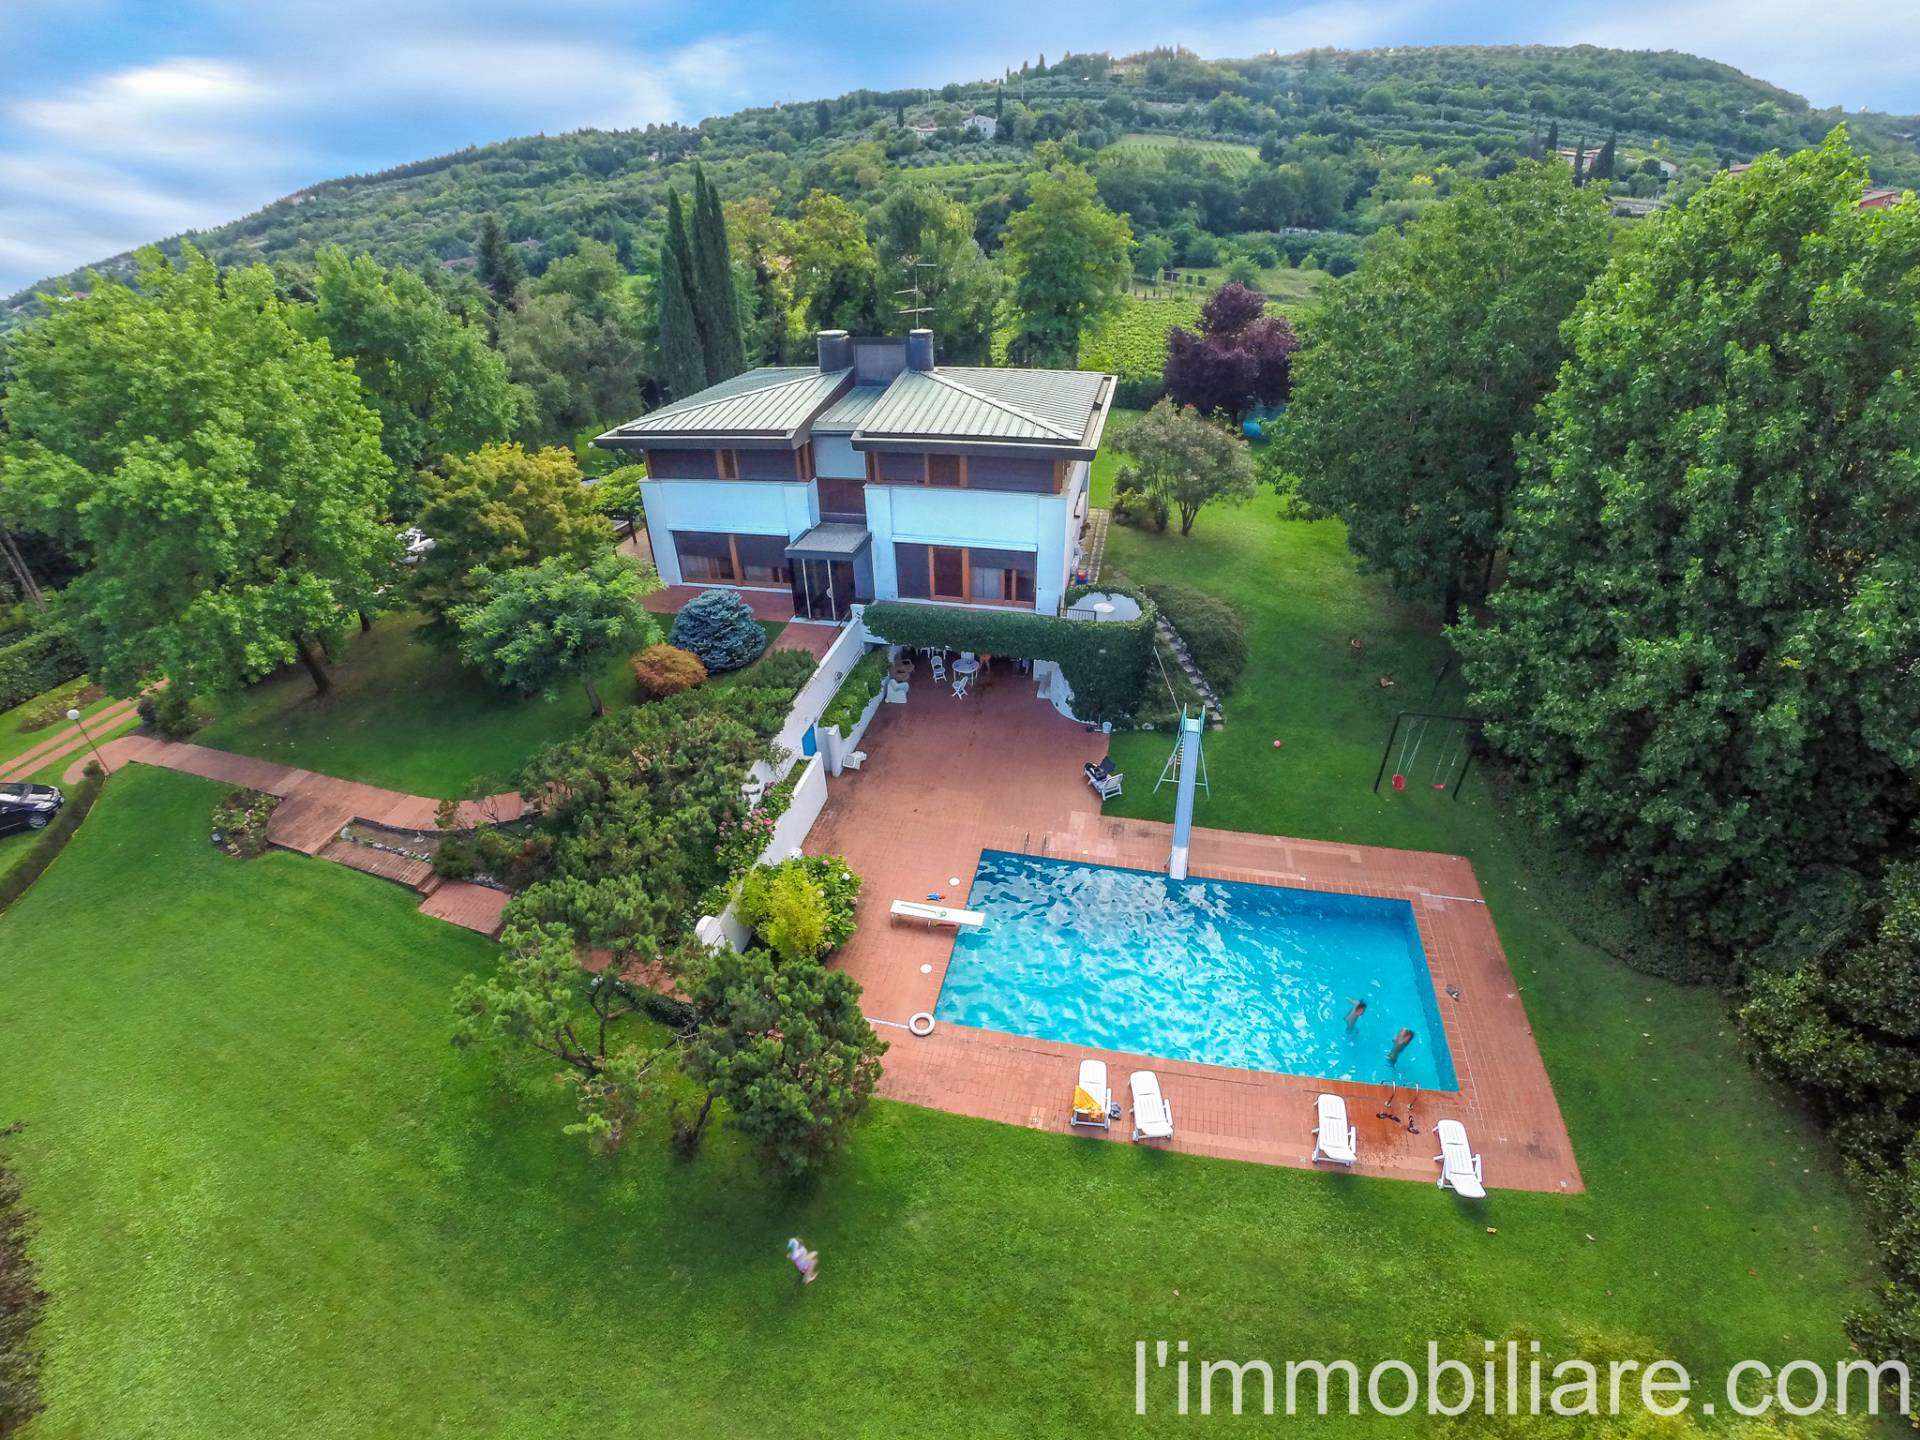 Villa in Vendita a Verona: 5 locali, 468 mq - Foto 1